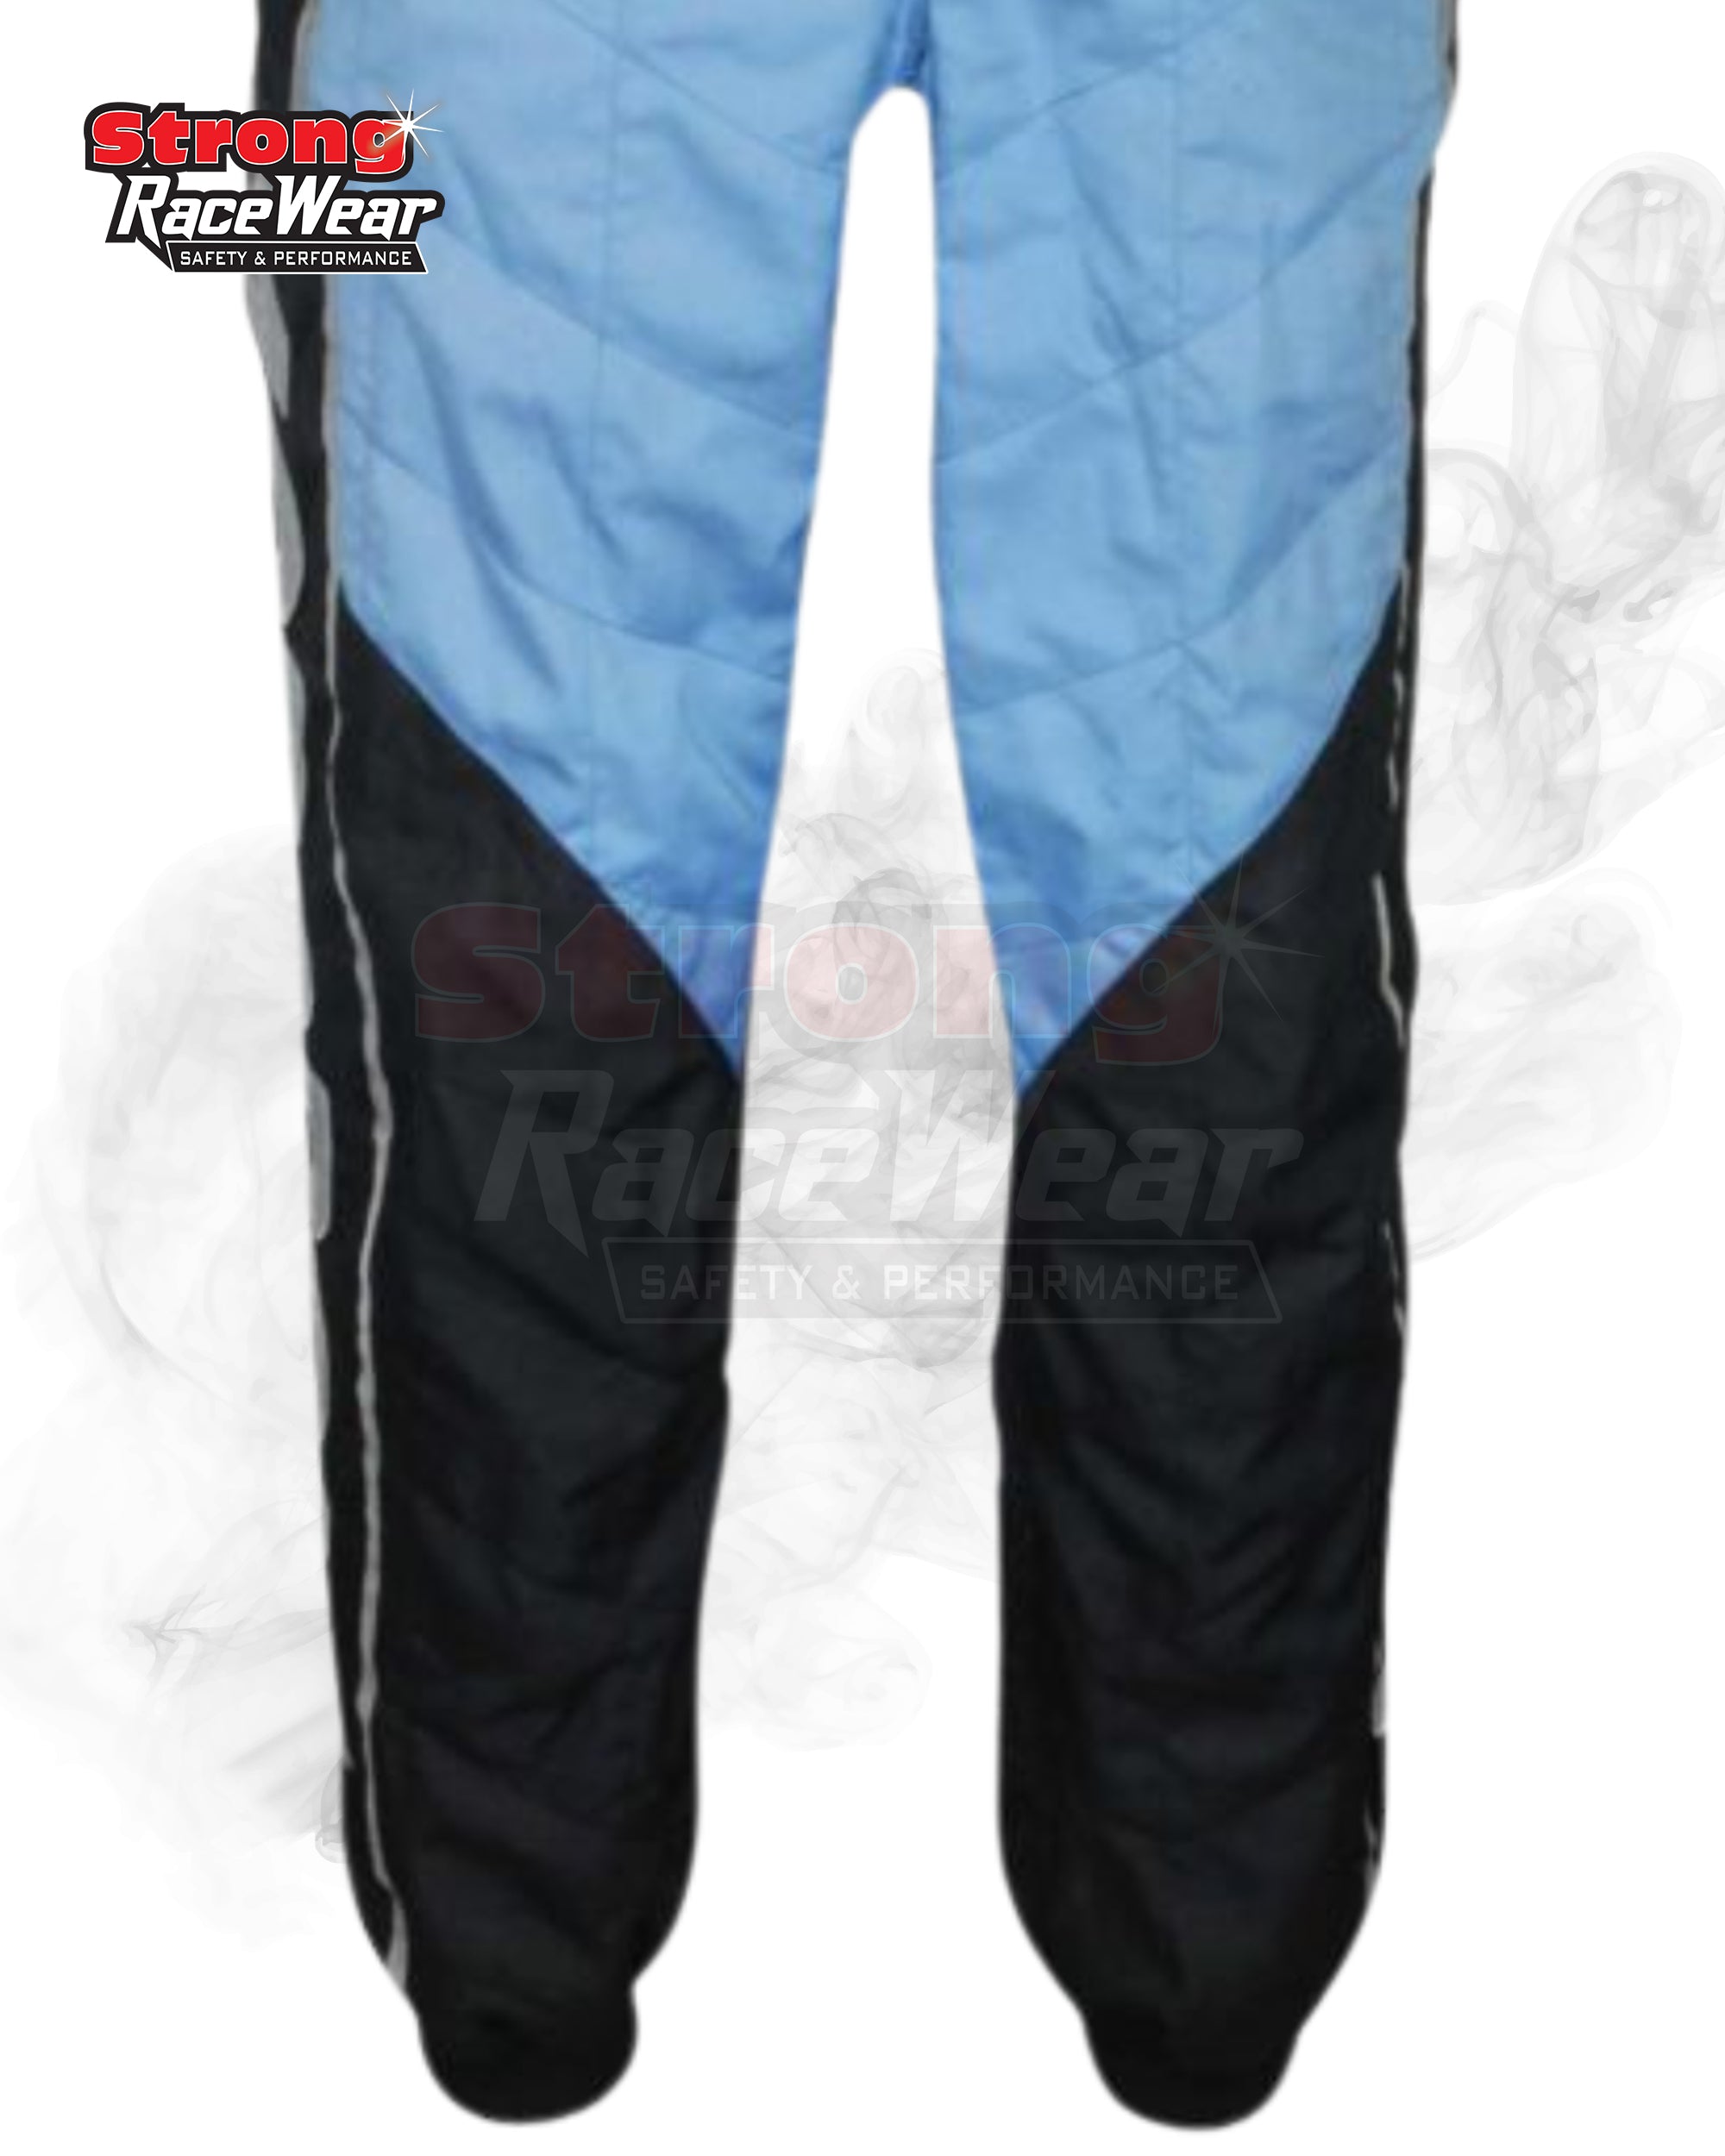 2007 Danica Patrick Green Indycar Racing Suit